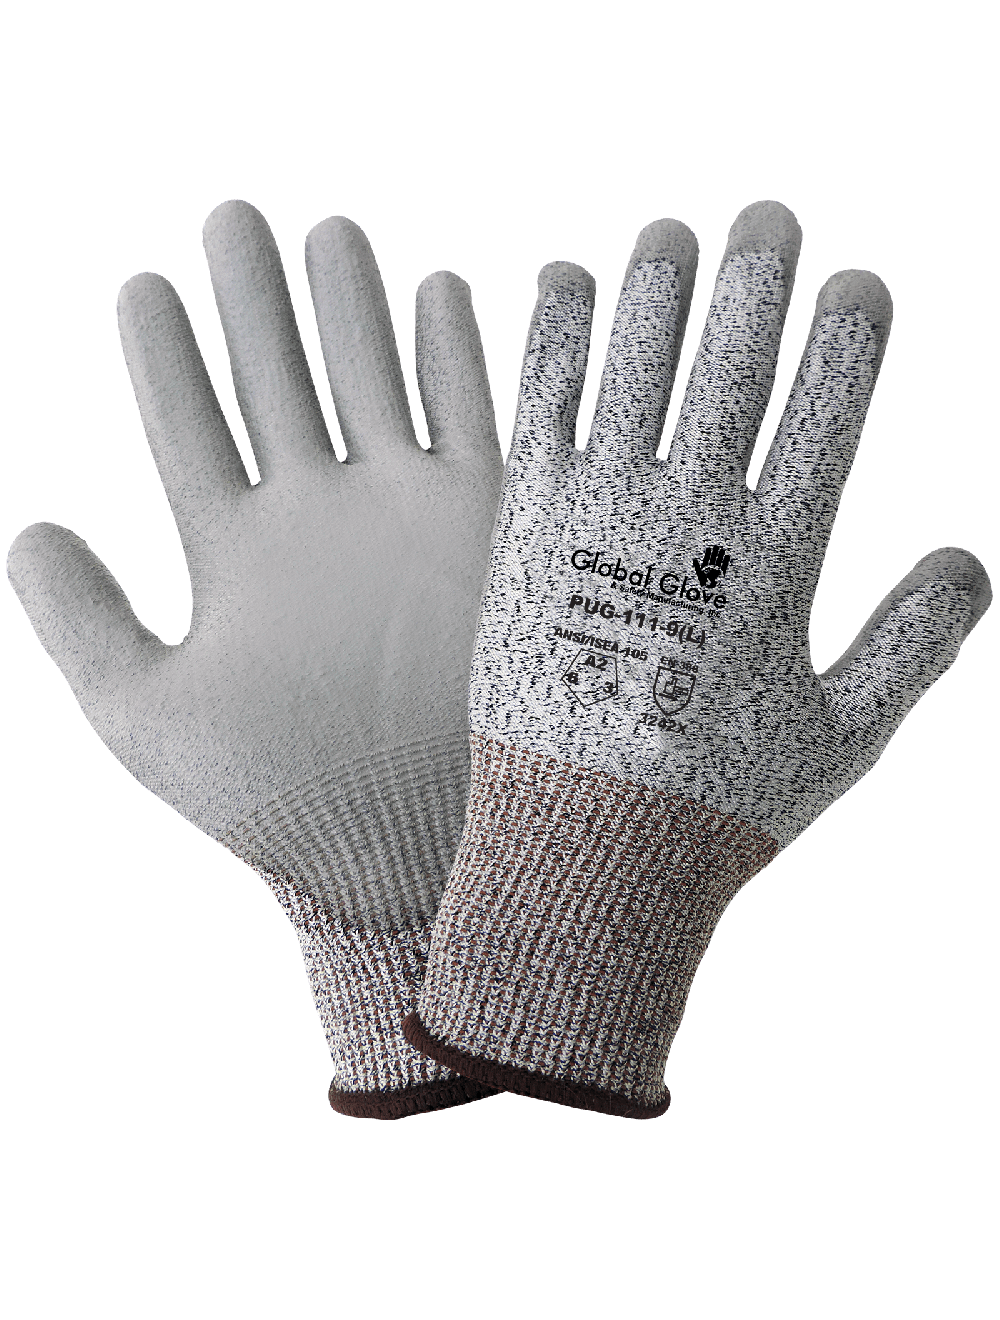 Global PUG PUG17-L Polyurethane Coated Nylon Work Gloves, Black